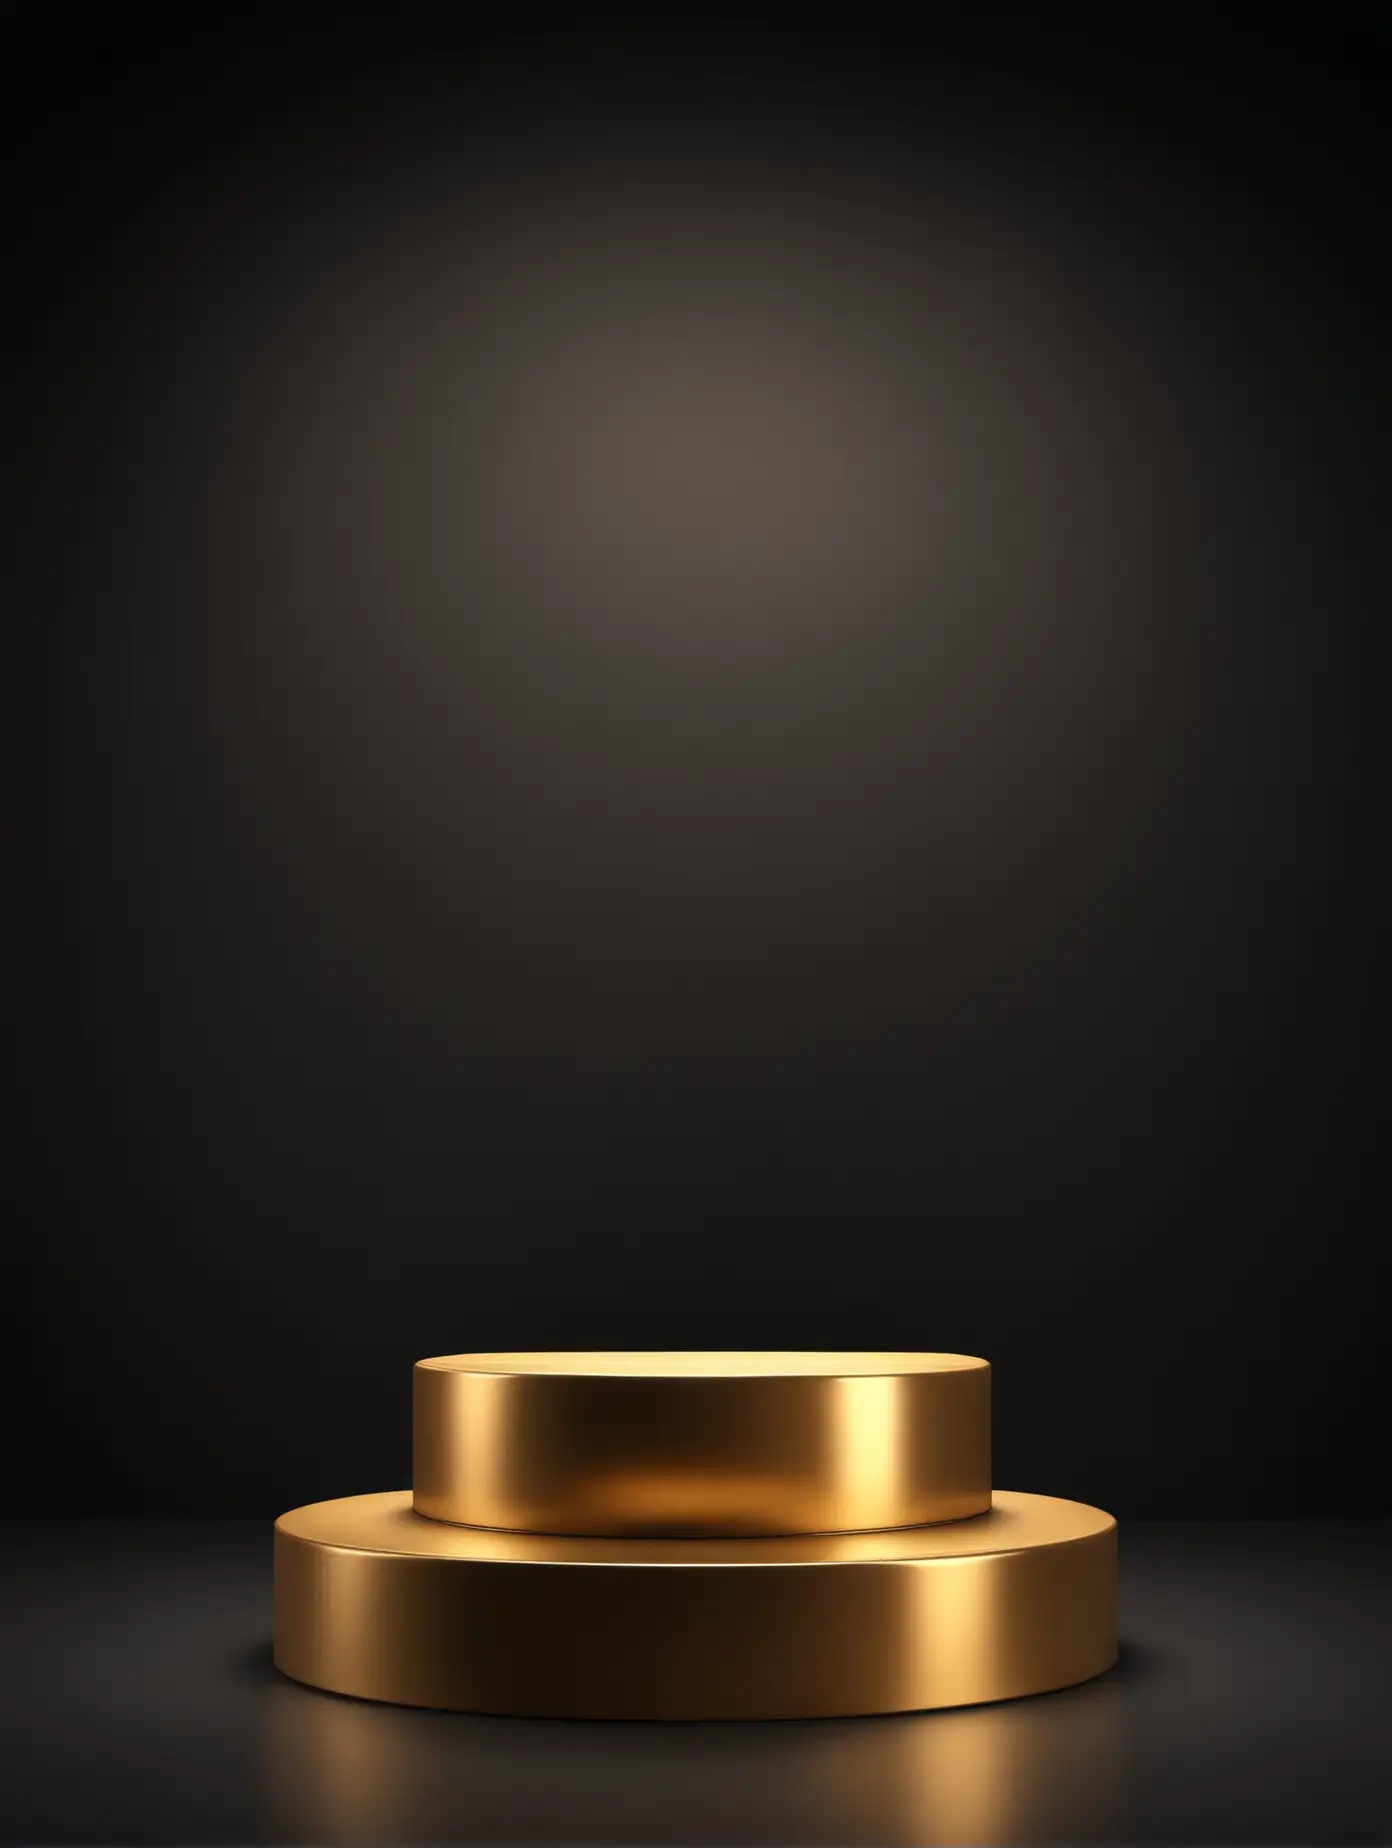 Golden-Minimalist-Podium-Illuminated-on-Black-Background